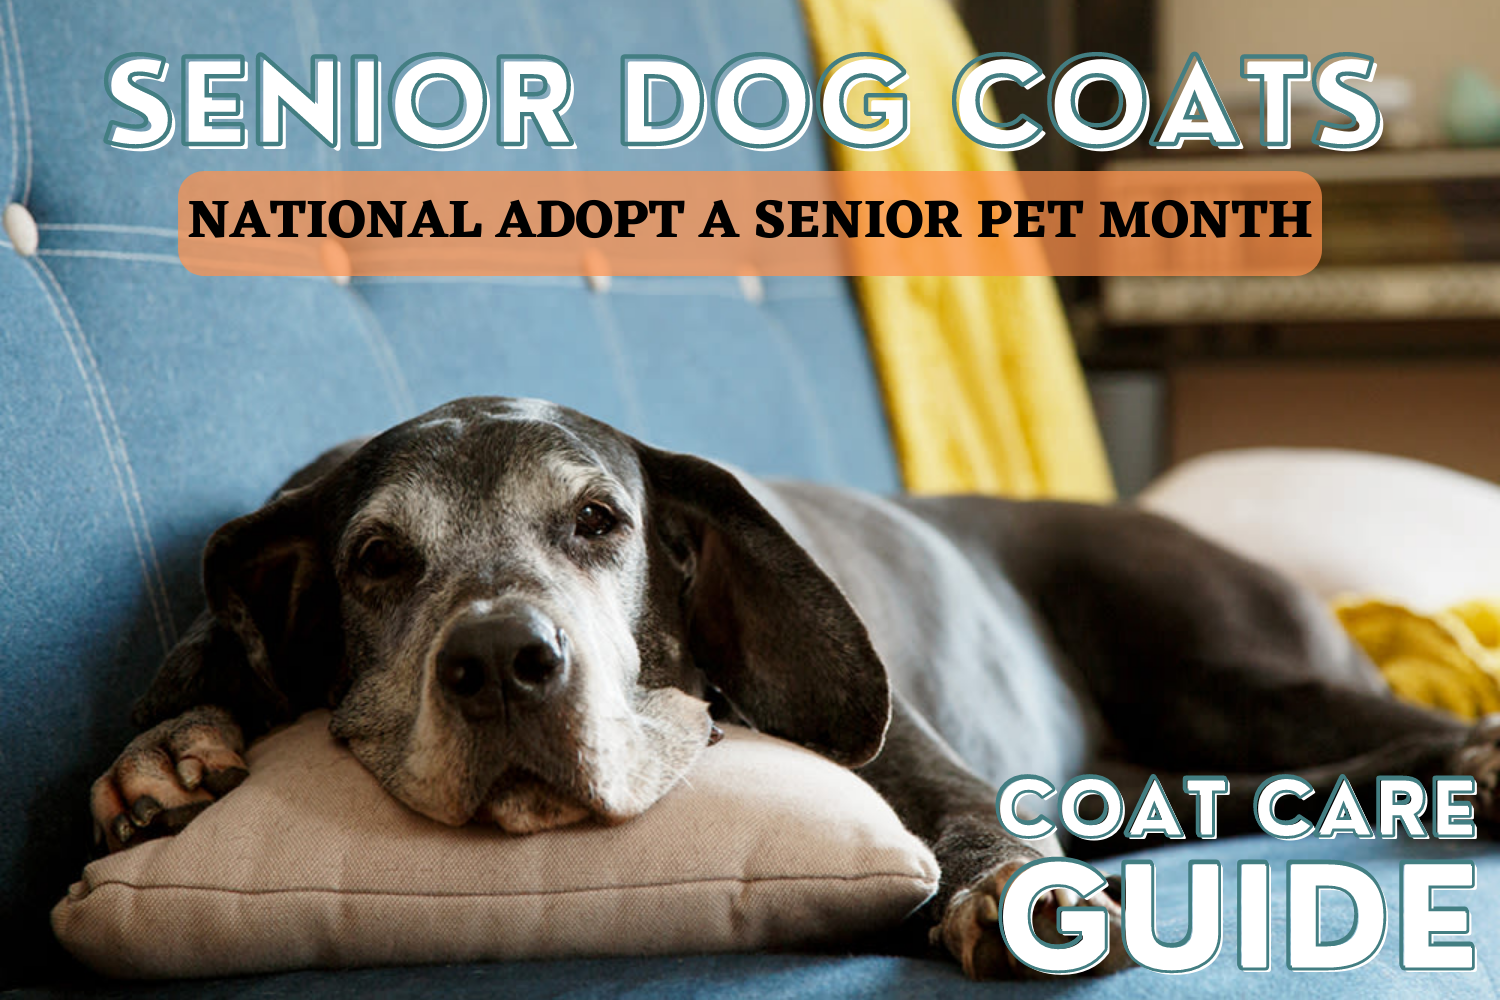 Coat Care Guide for Senior Dogs - Adopt a Senior Pet Month | WildWash